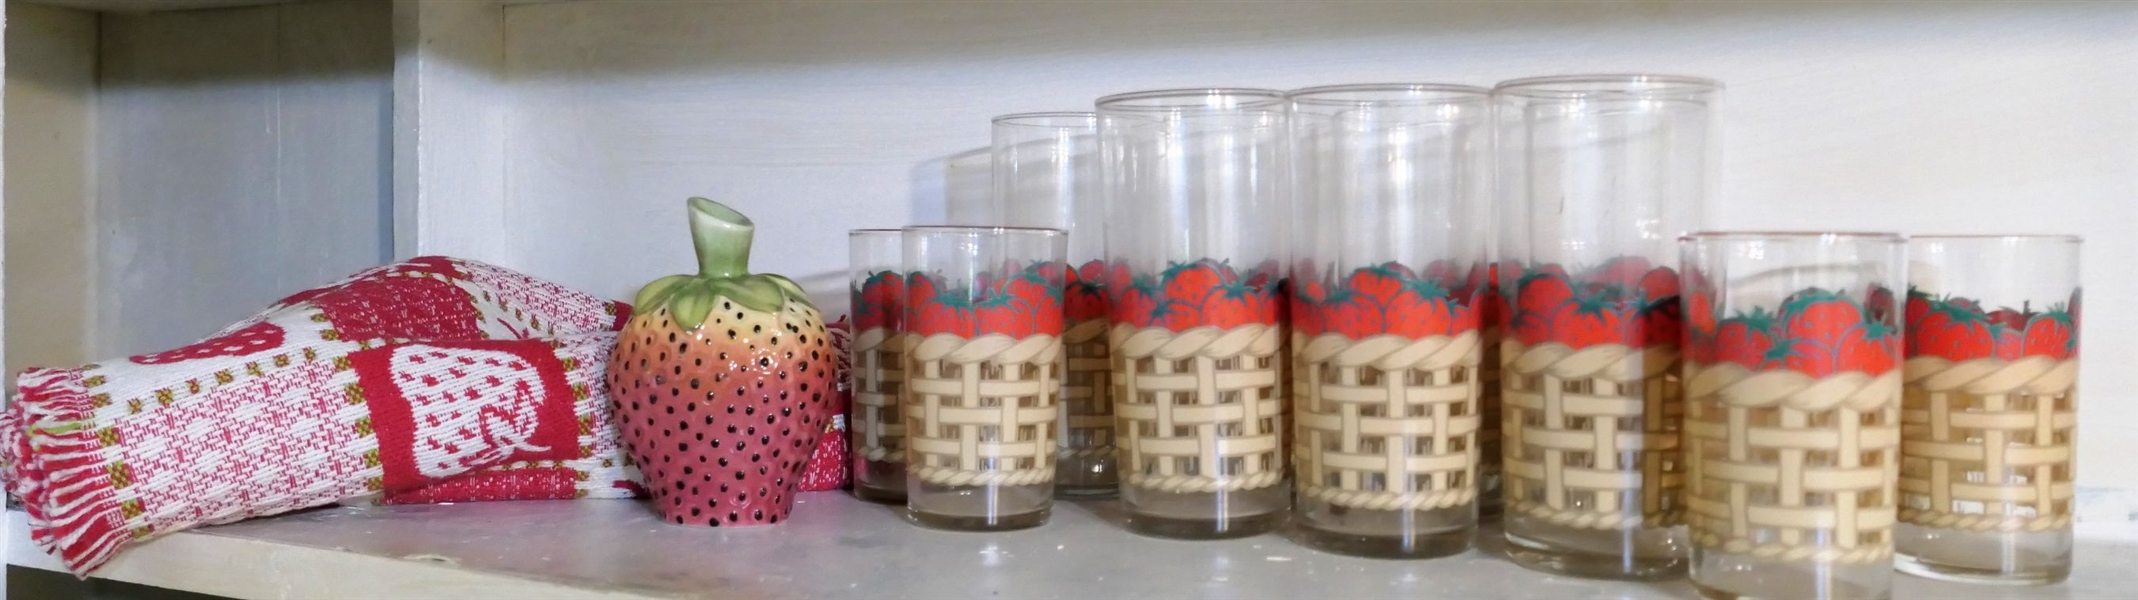 11 Strawberry Basket Glasses, Strawberry Bud Vase, and Strawberry Table Runner